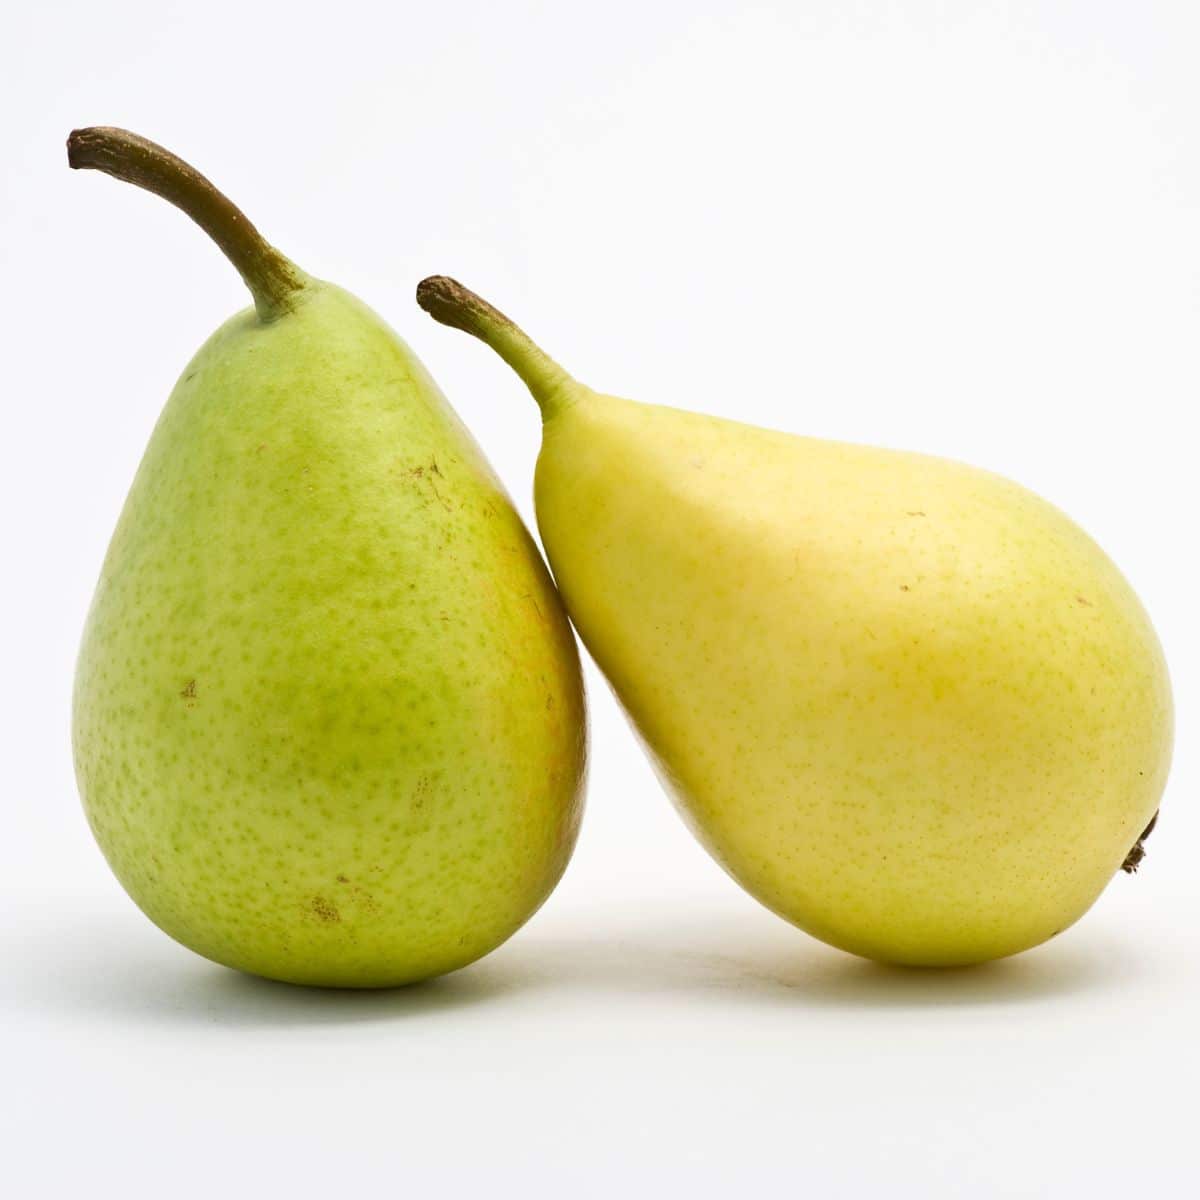 European pears on a white background.